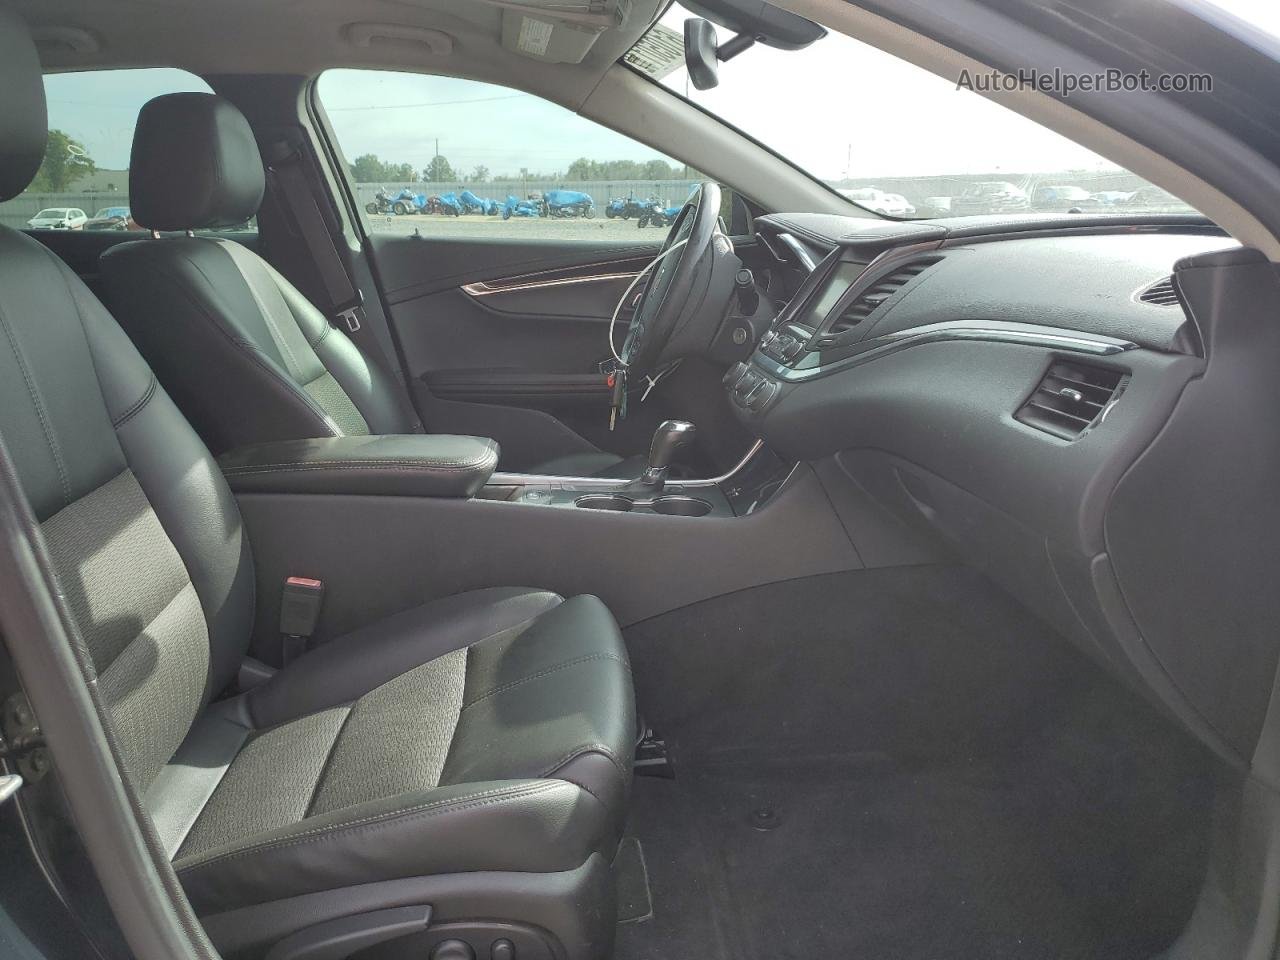 2017 Chevrolet Impala Lt Черный vin: 2G1105SA7H9114675